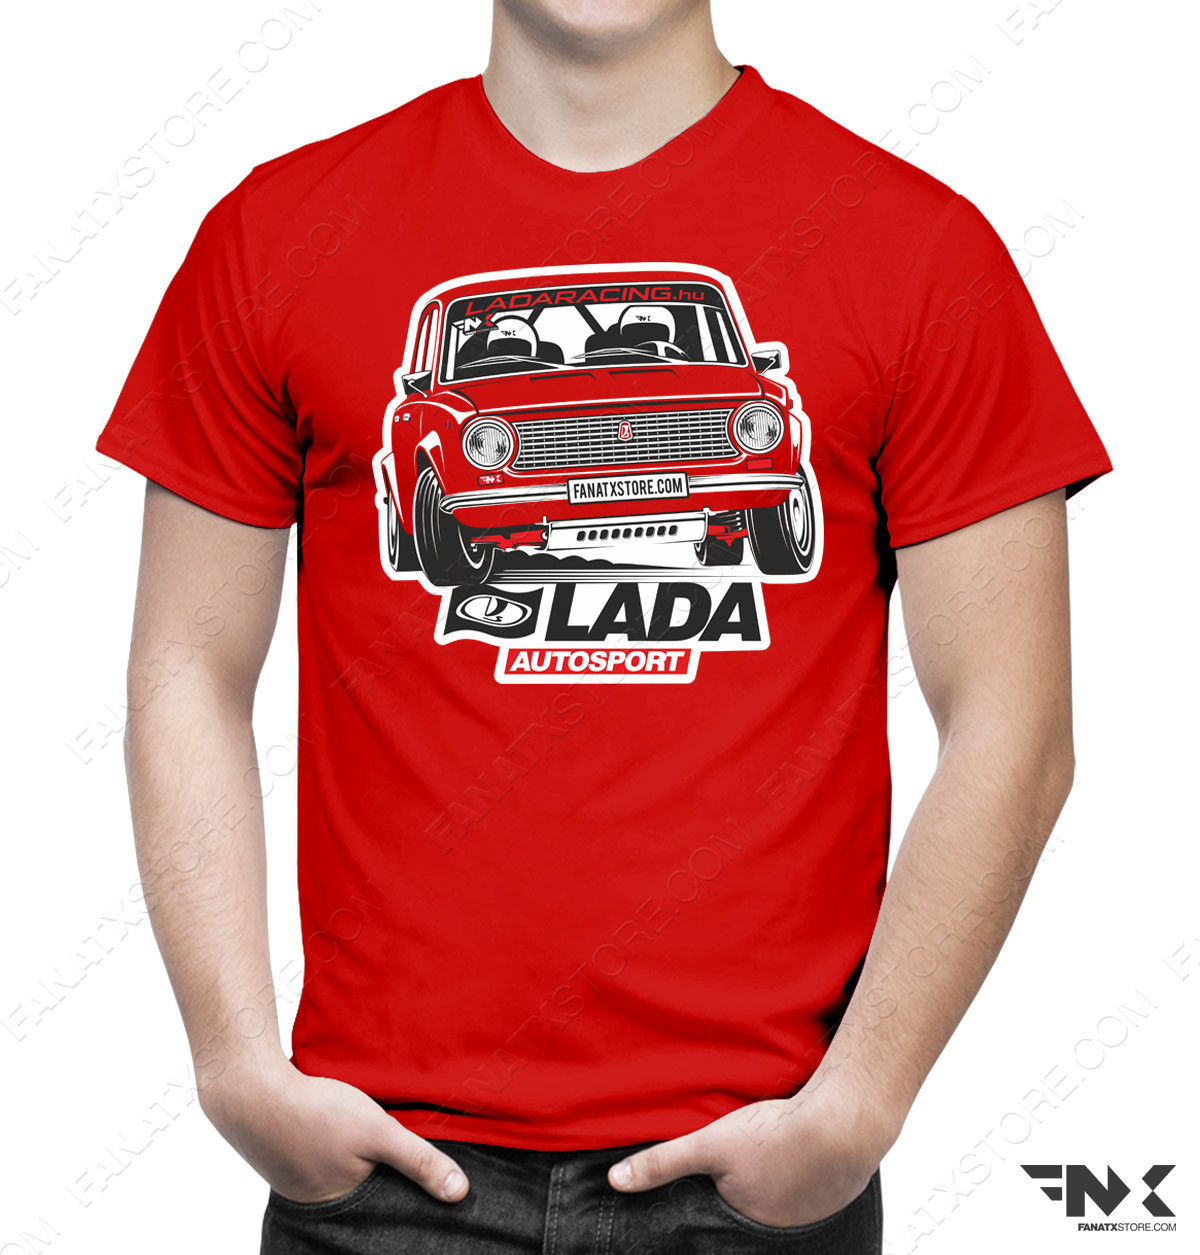 Robert Elek Clothing collection - LADA Autosport | LADA 2101